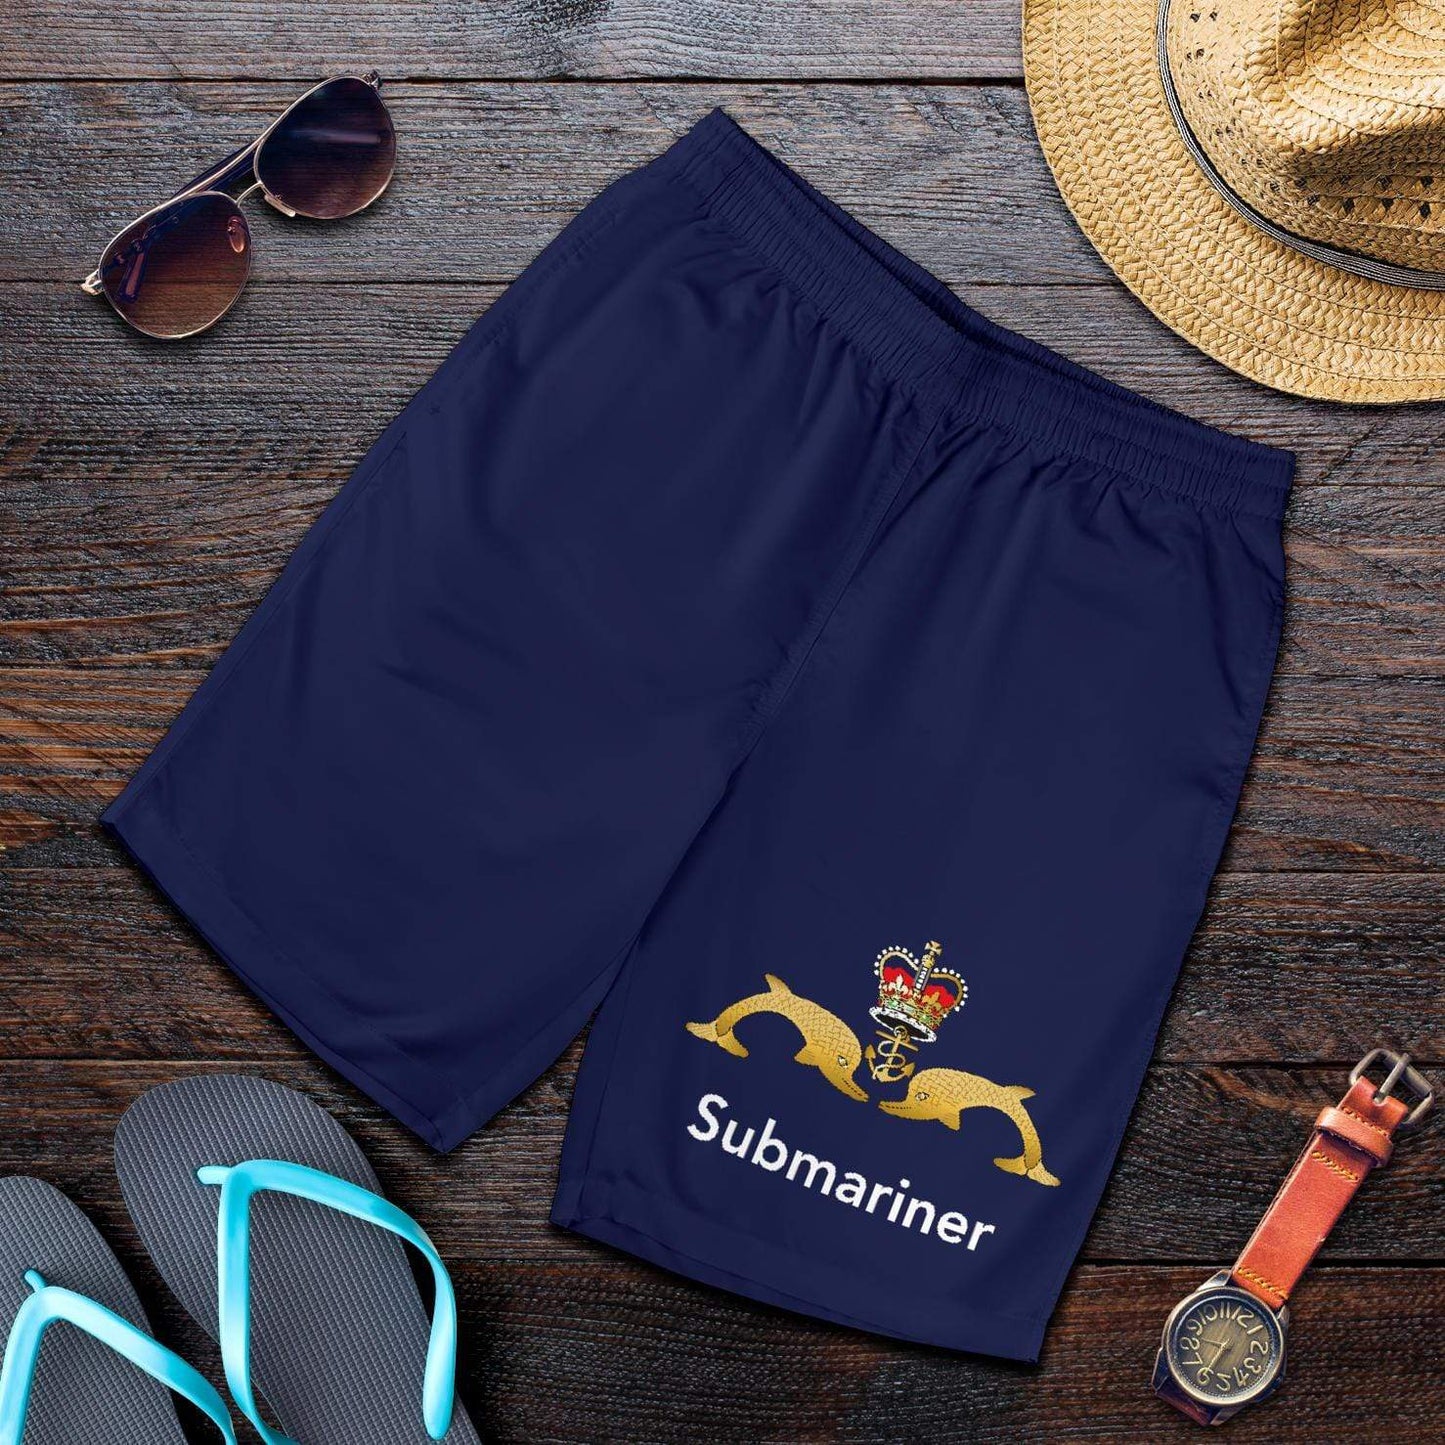 shorts Men's Shorts - Submariner Men's Shorts / S Submariner Men's Shorts